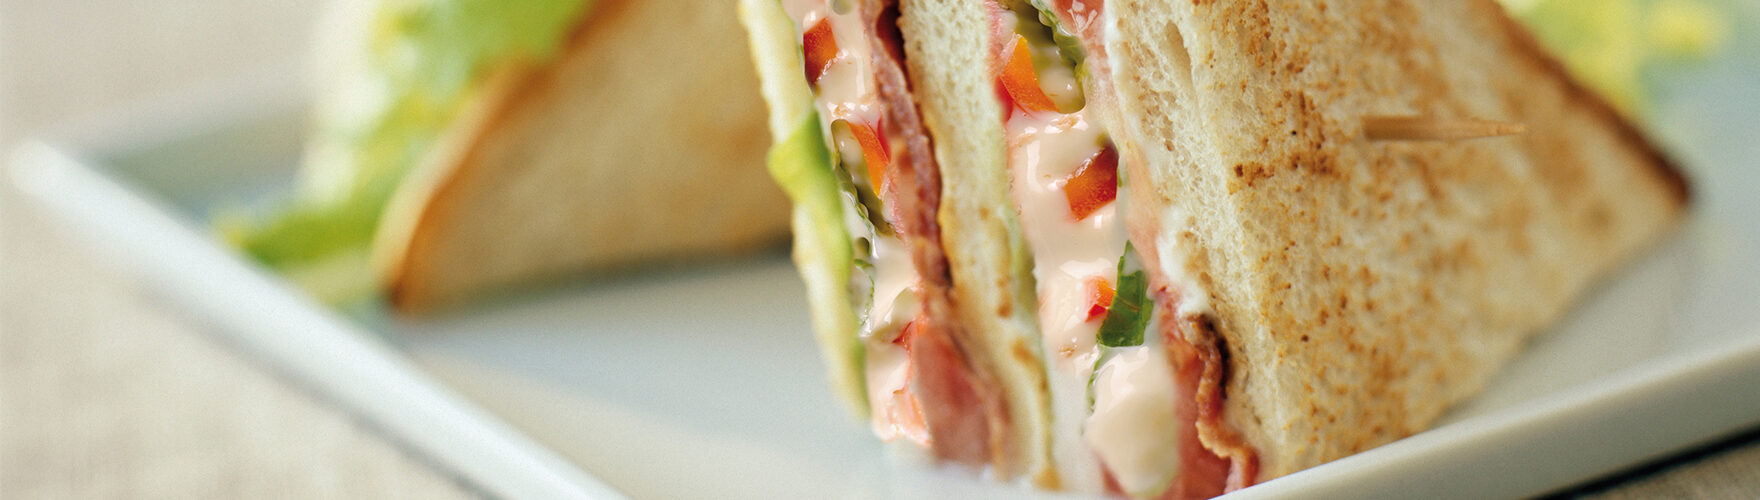 Klassieke club sandwich